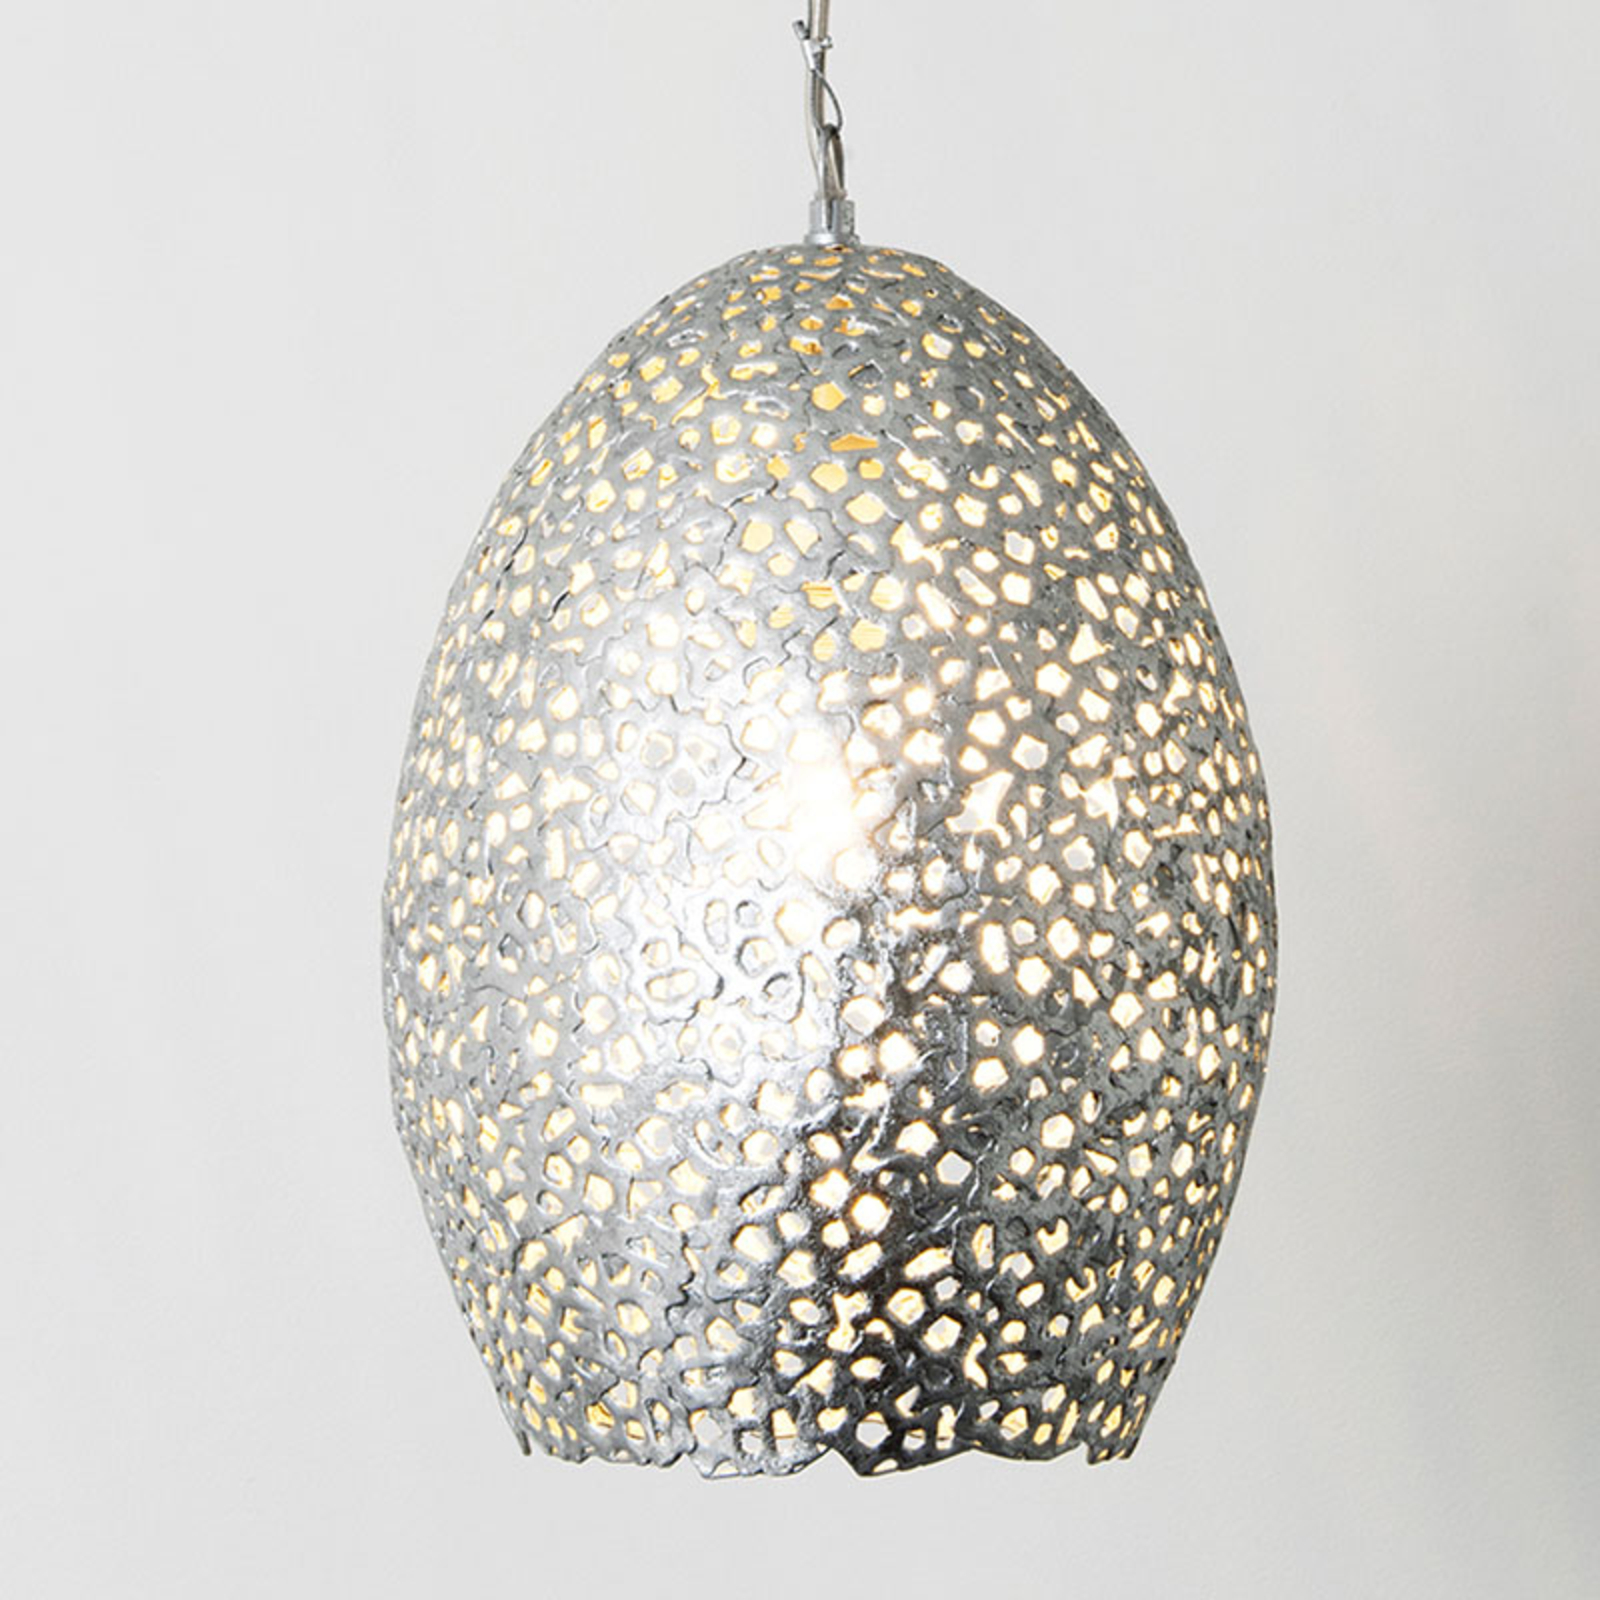 Lampa wisząca Cavalliere, srebrna, Ø 22 cm